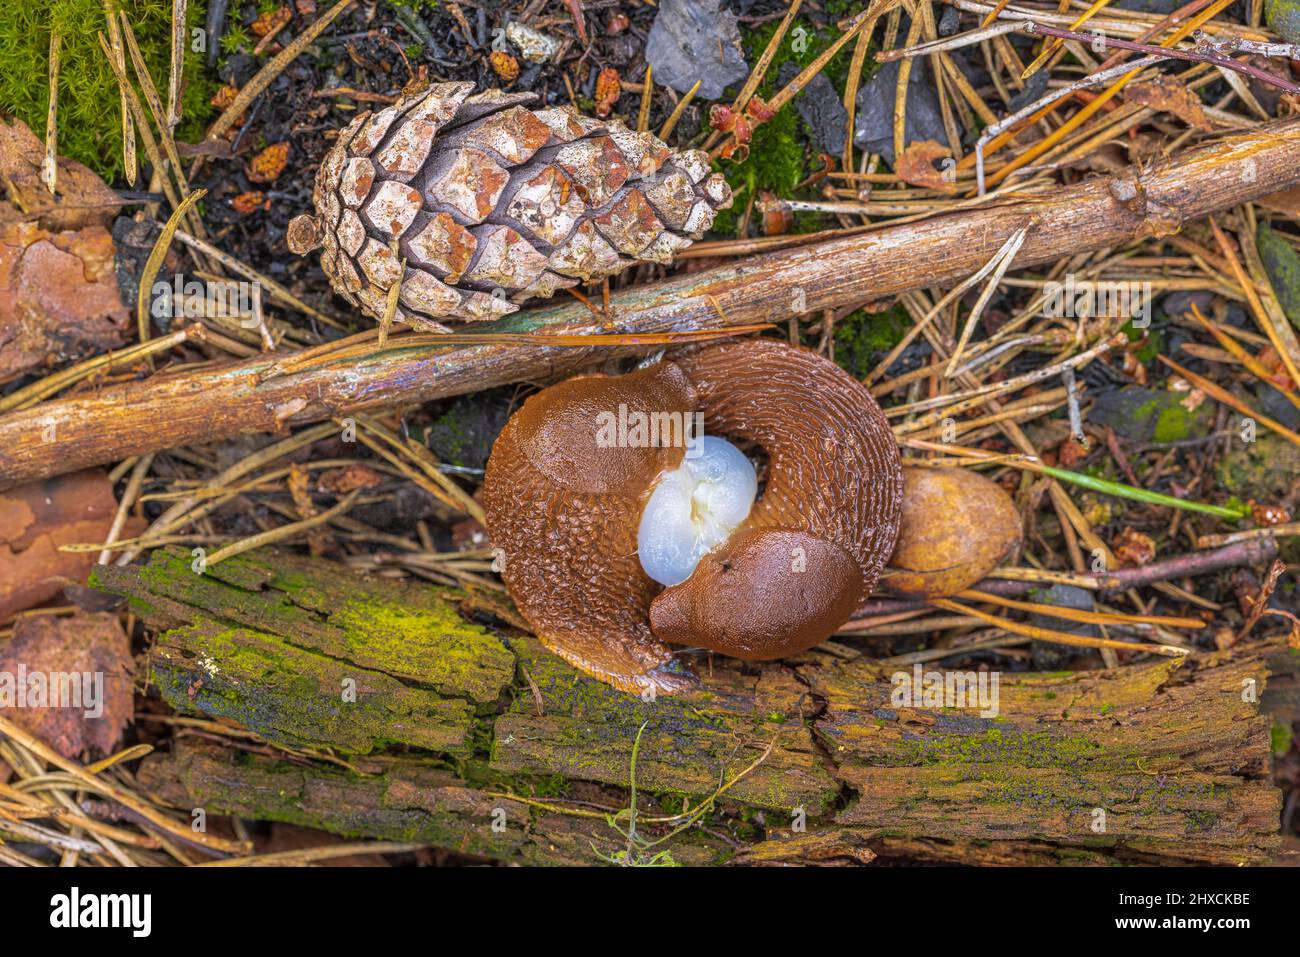 Spanish way snail, mating, reproduction, Stock Photo